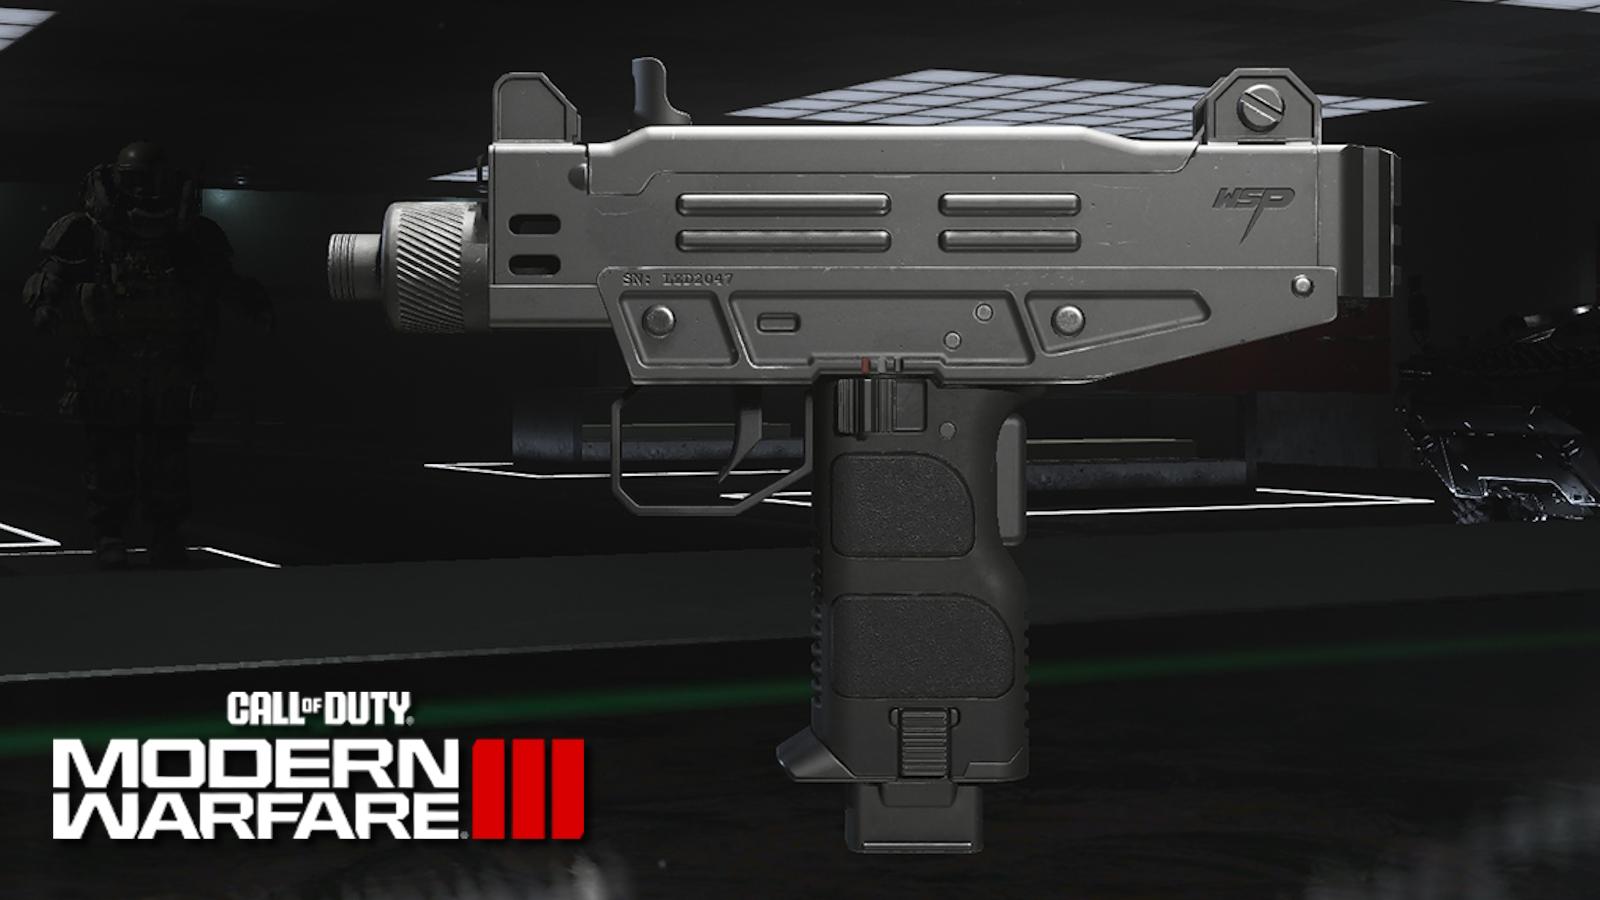 The WSP Stinger pistol in Modern Warfare 3.